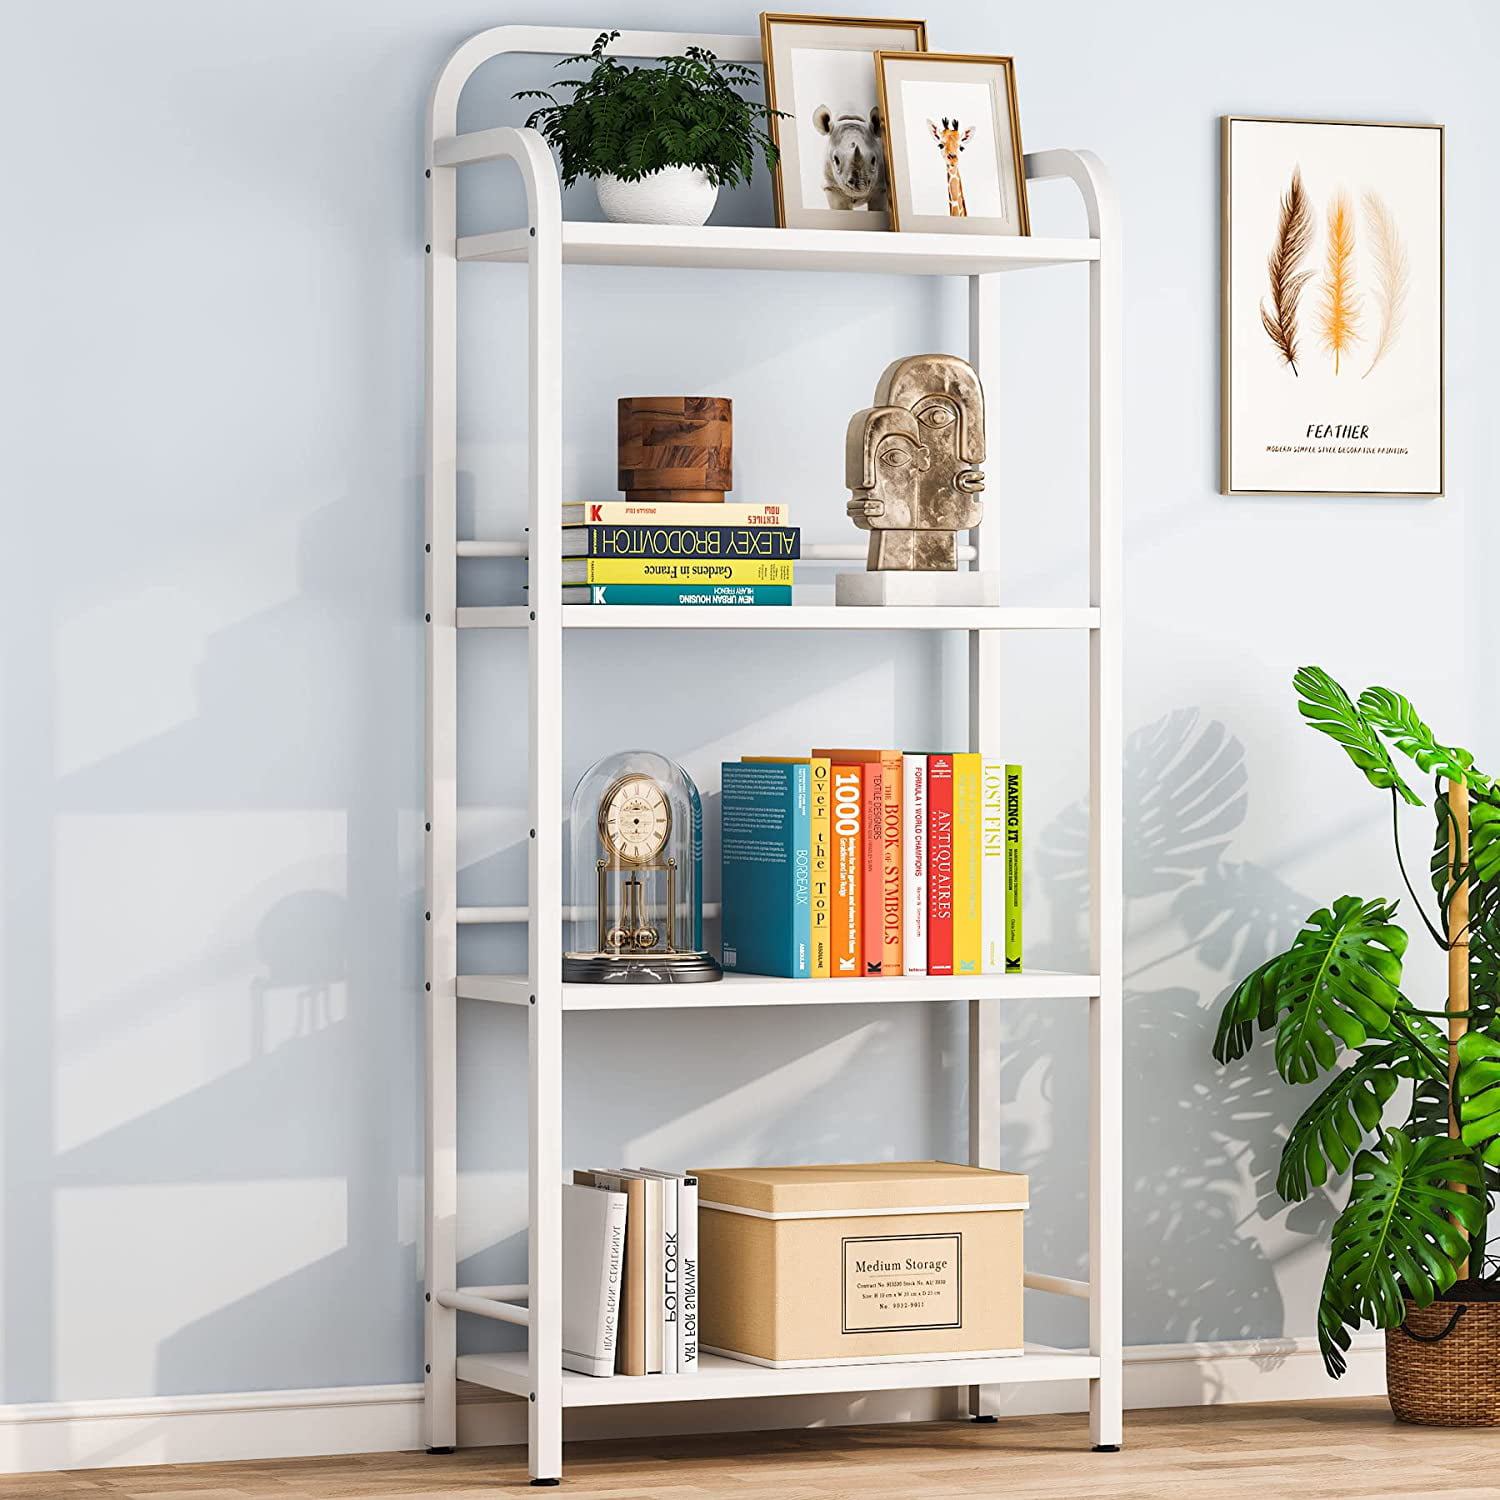 Details about   5 Tier Bookcase Bookshelf Display Rack Shelves Shelving Organizer Set Industrial 